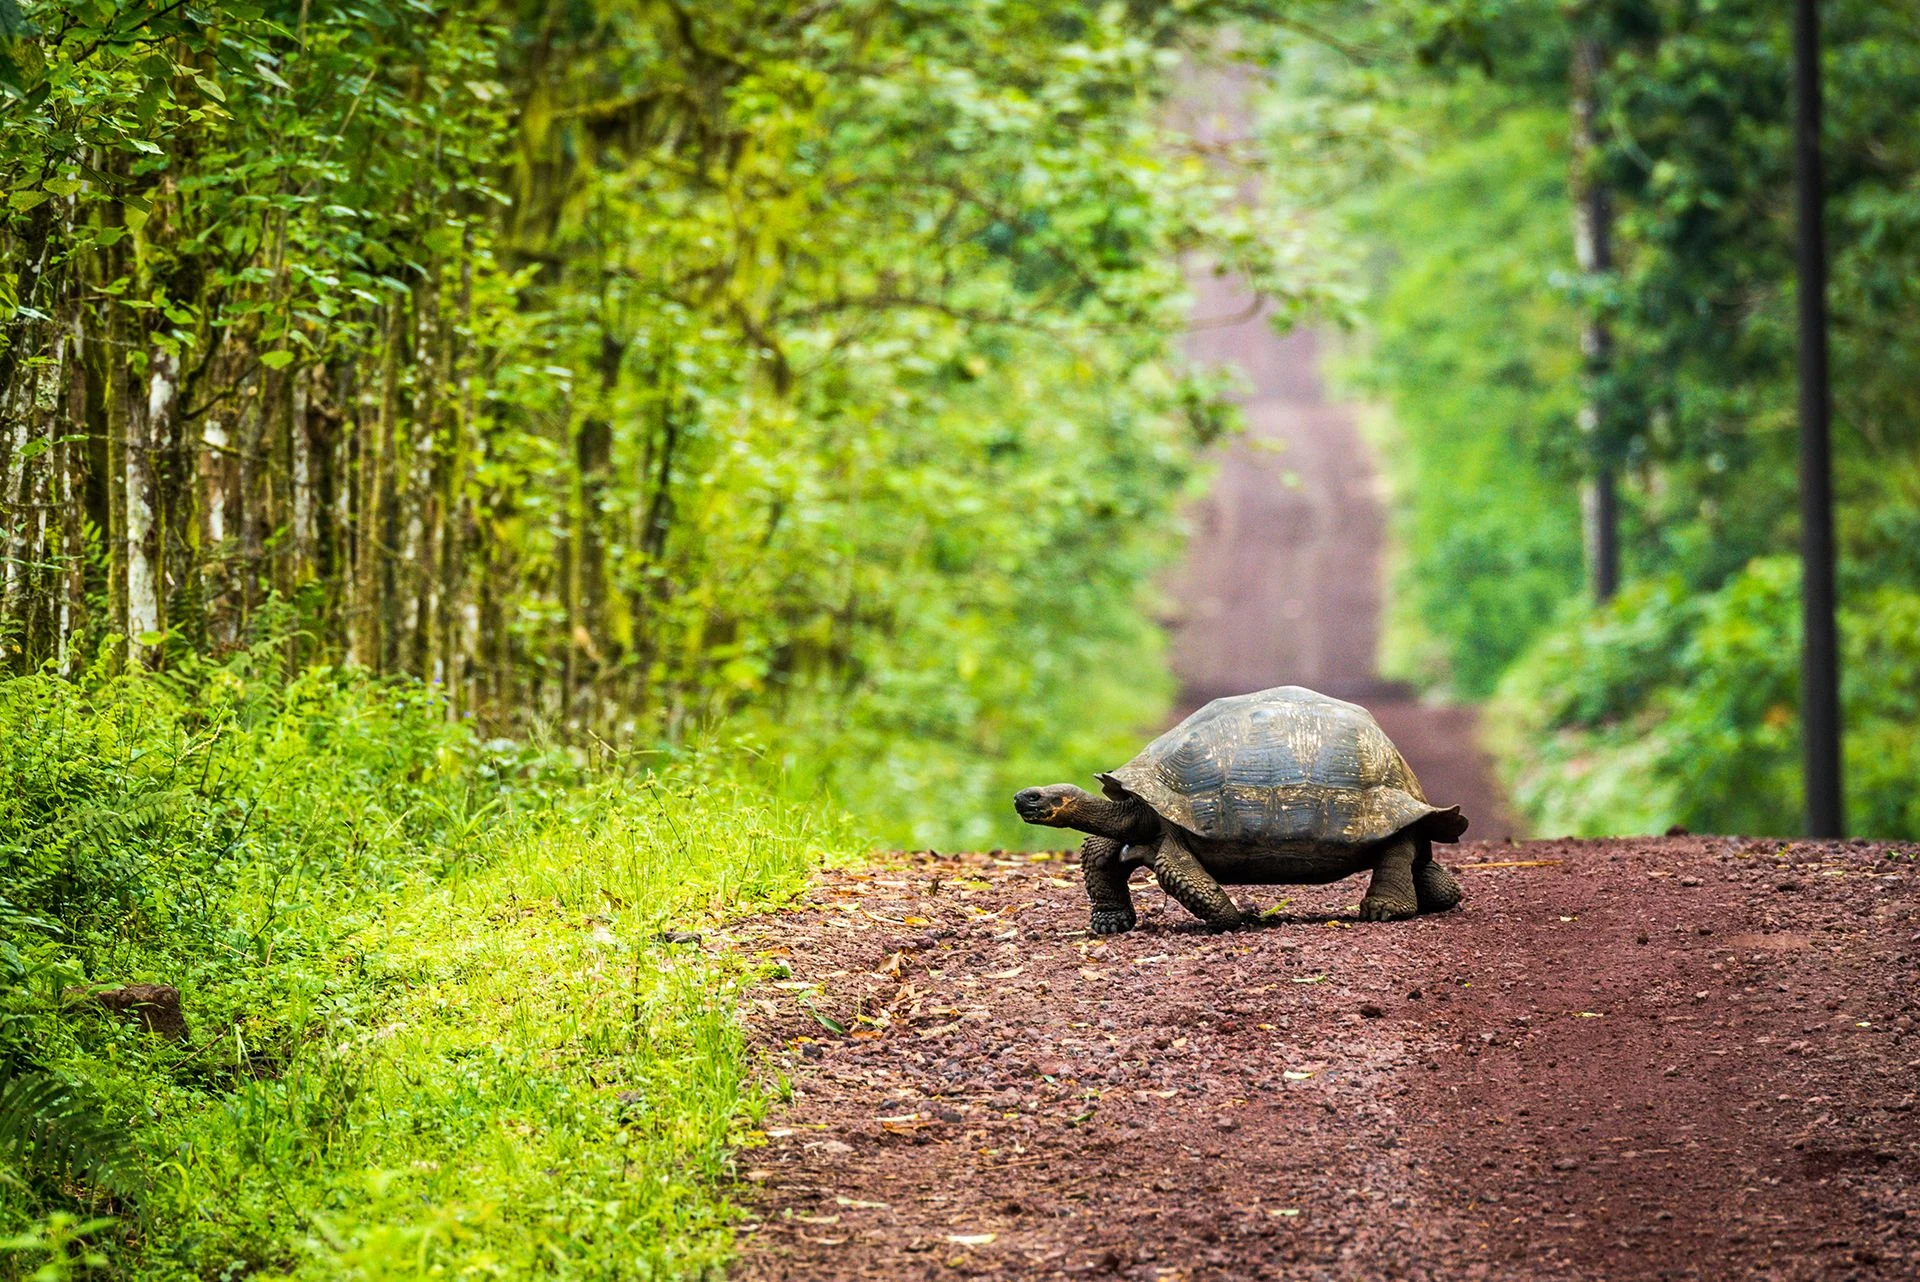 Puerto Ayora on Santa Cruz Island has road signs warning of tortoises and iguanas crossing.